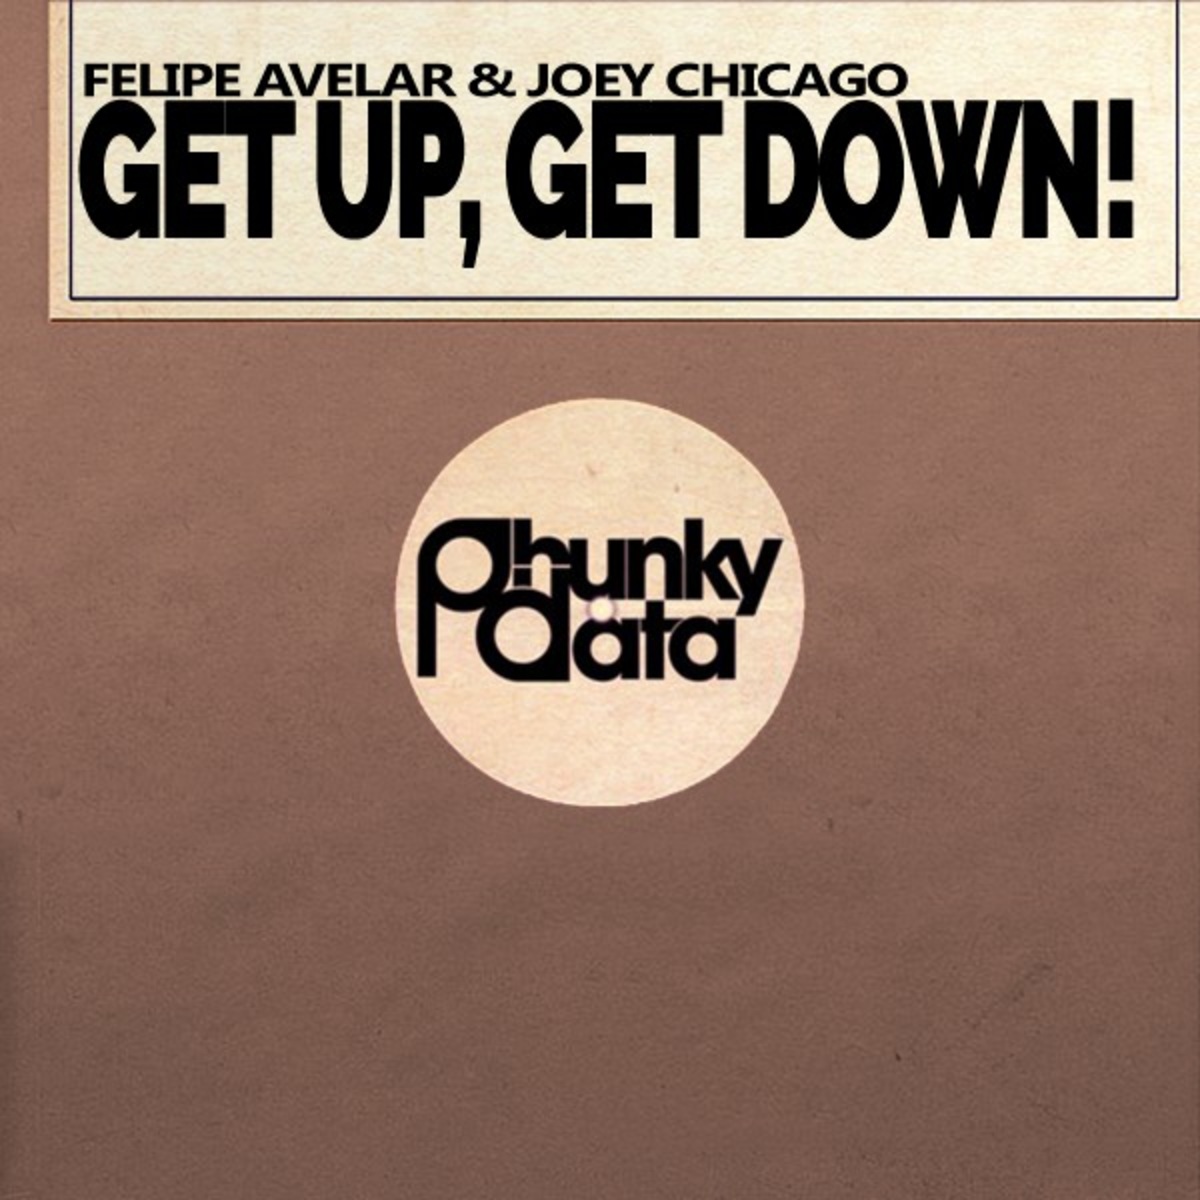 Felipe Avelar & Joey Chicago - Get Up, Get Down! / Phunky Data